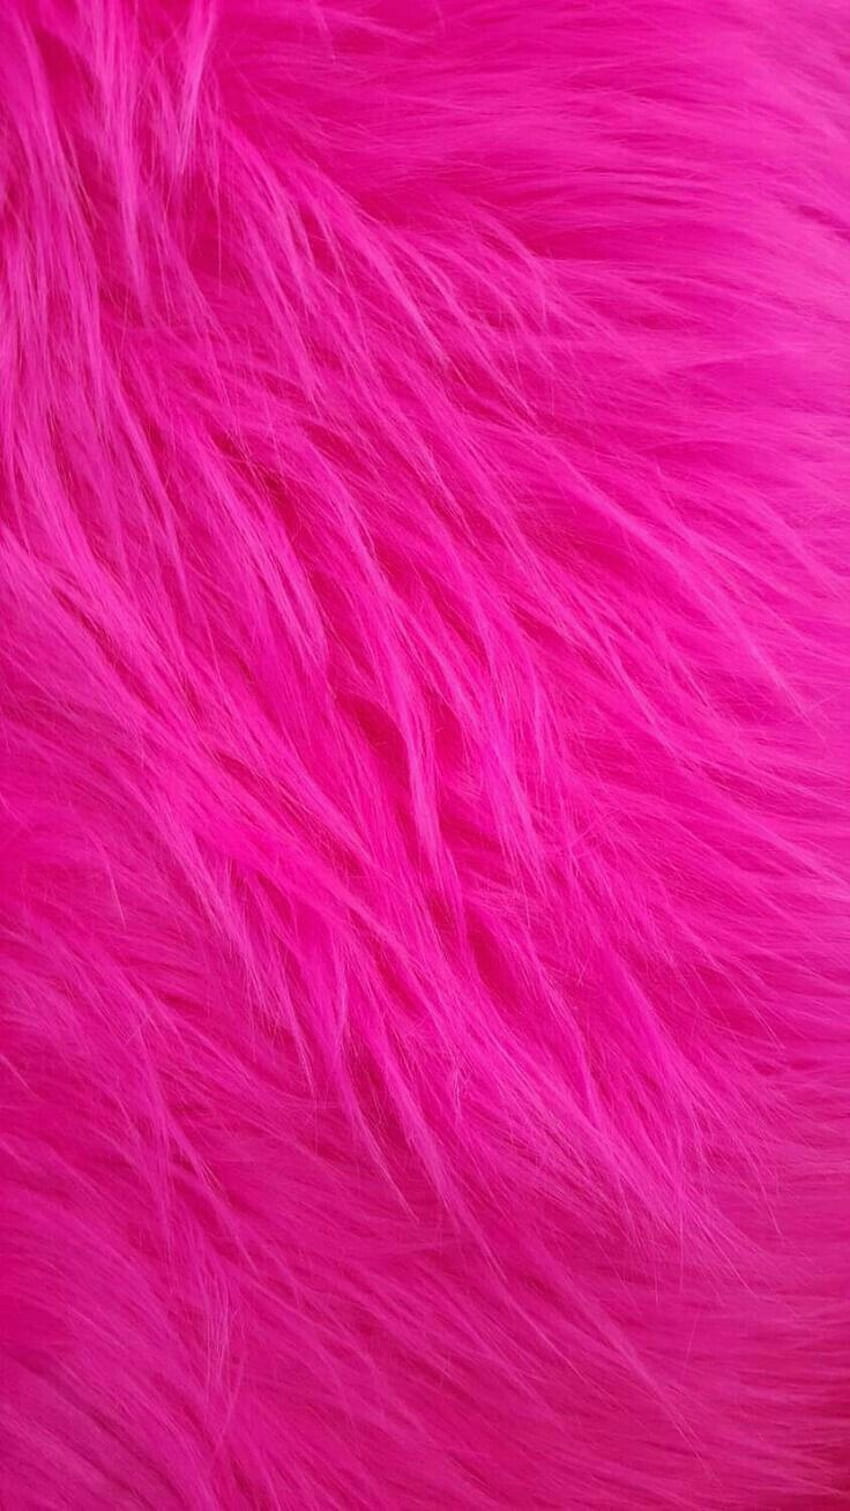 Bulu Merah Muda . Fondo de layar rosado untuk iphone, Fondos de brillos, iPhone fondos de layar, Pink Fashion wallpaper ponsel HD